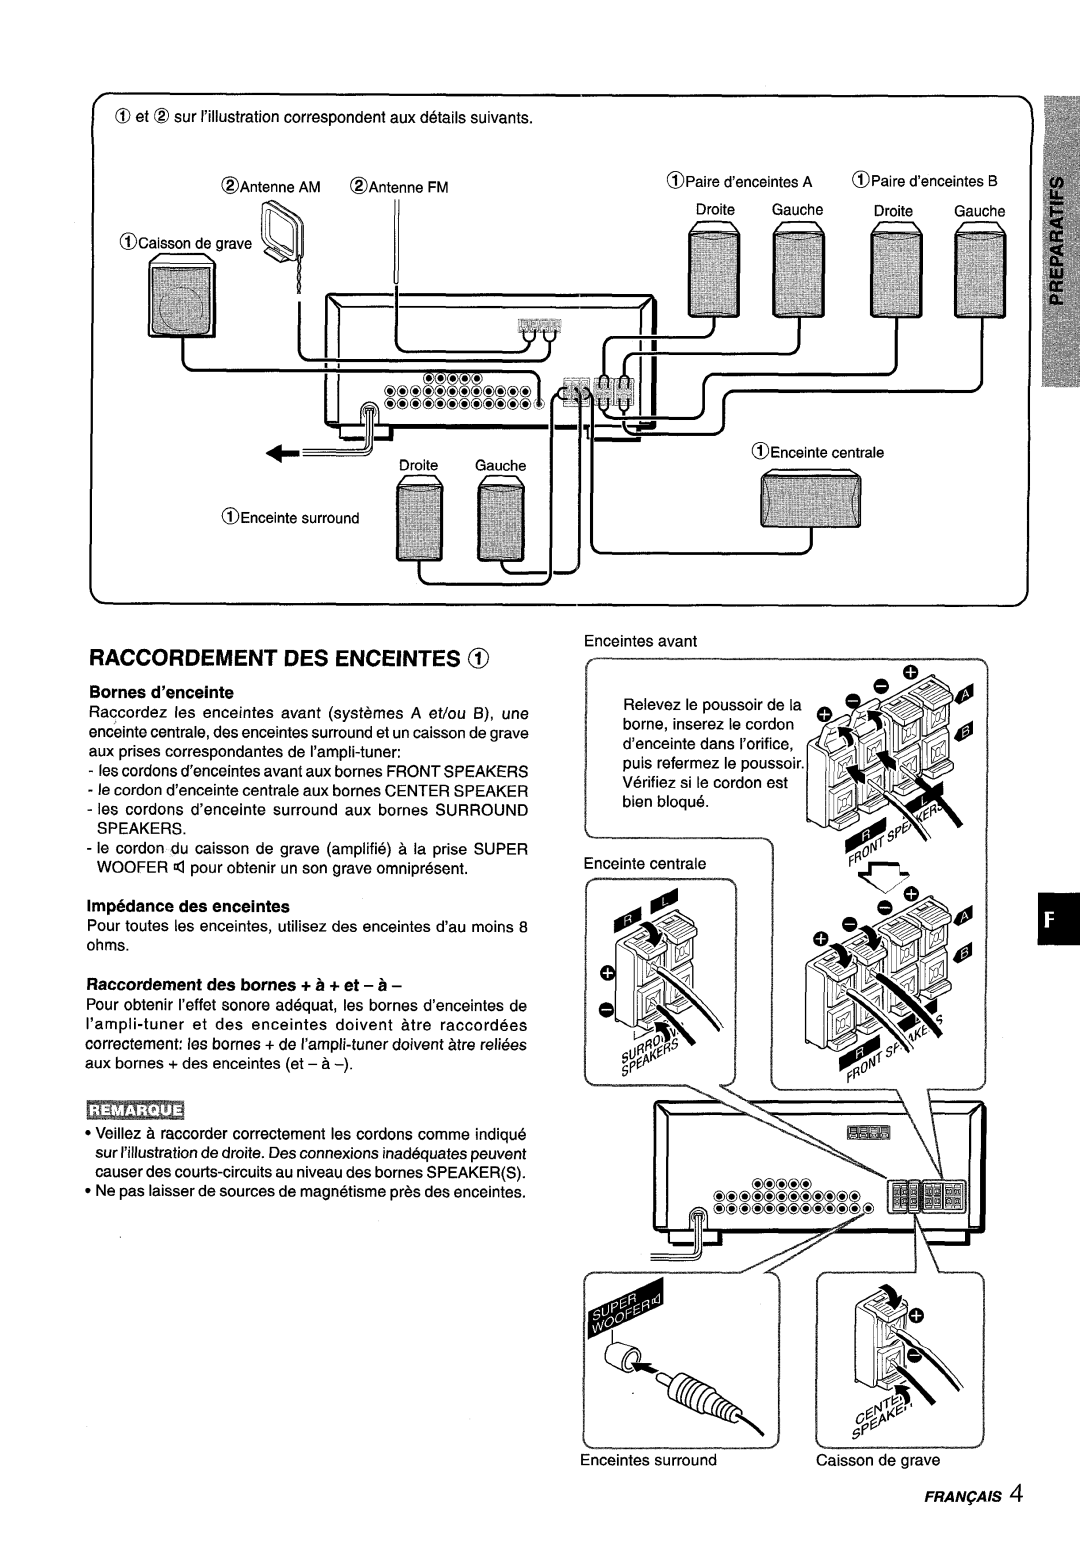 Aiwa AV-D25 manual nezu~rw, Raccordement Des Enceintes @, P “-’, Bornes d’enceinte, Impedance des enceintes 